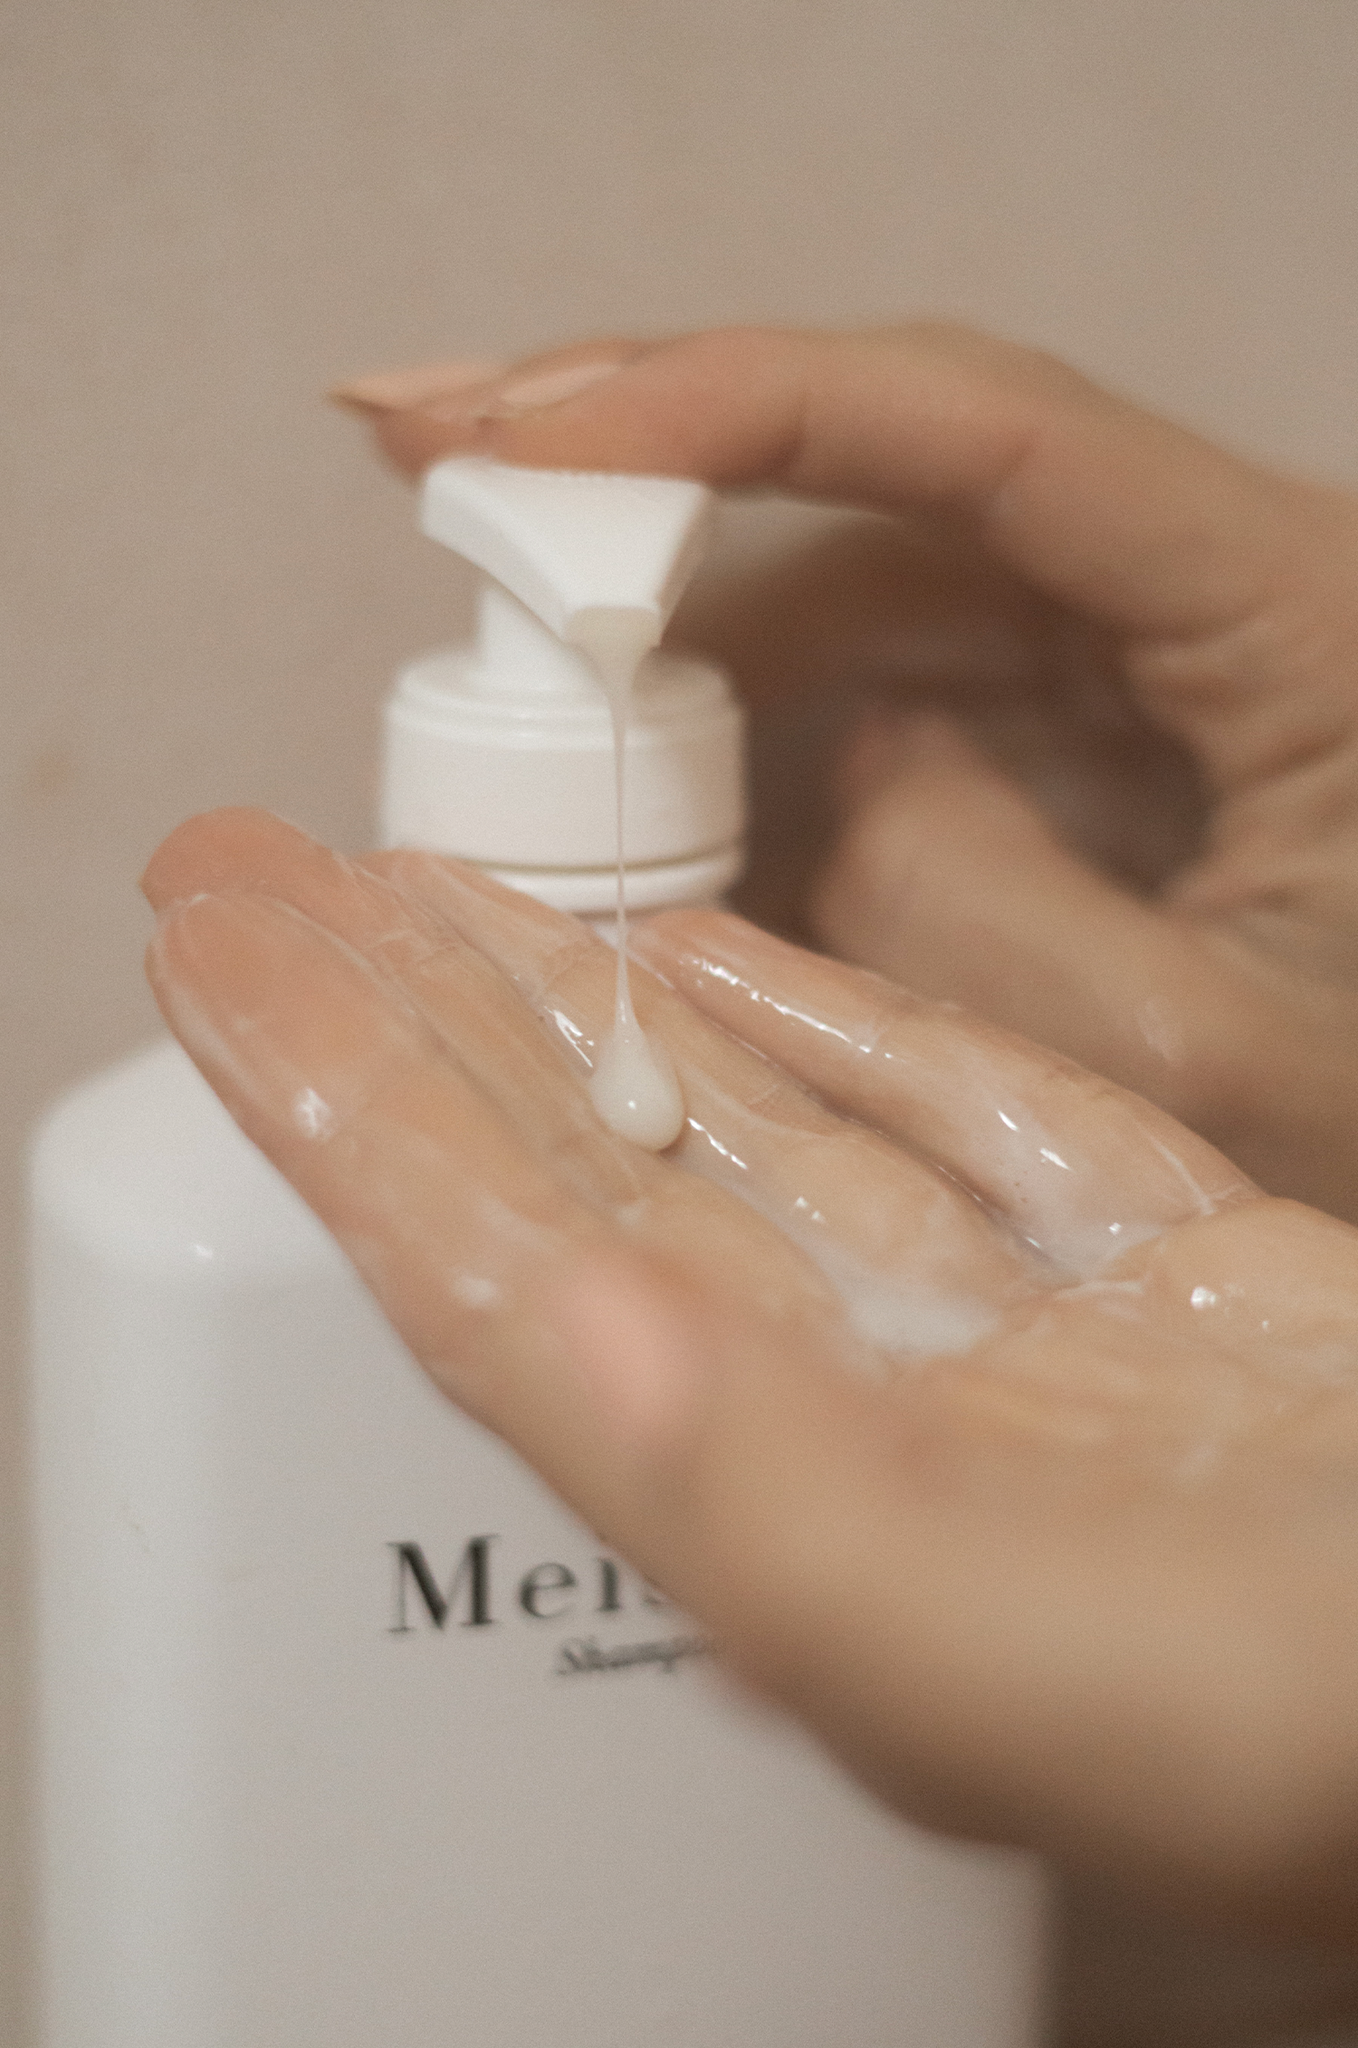 Meishai shampoo | friends of sitre